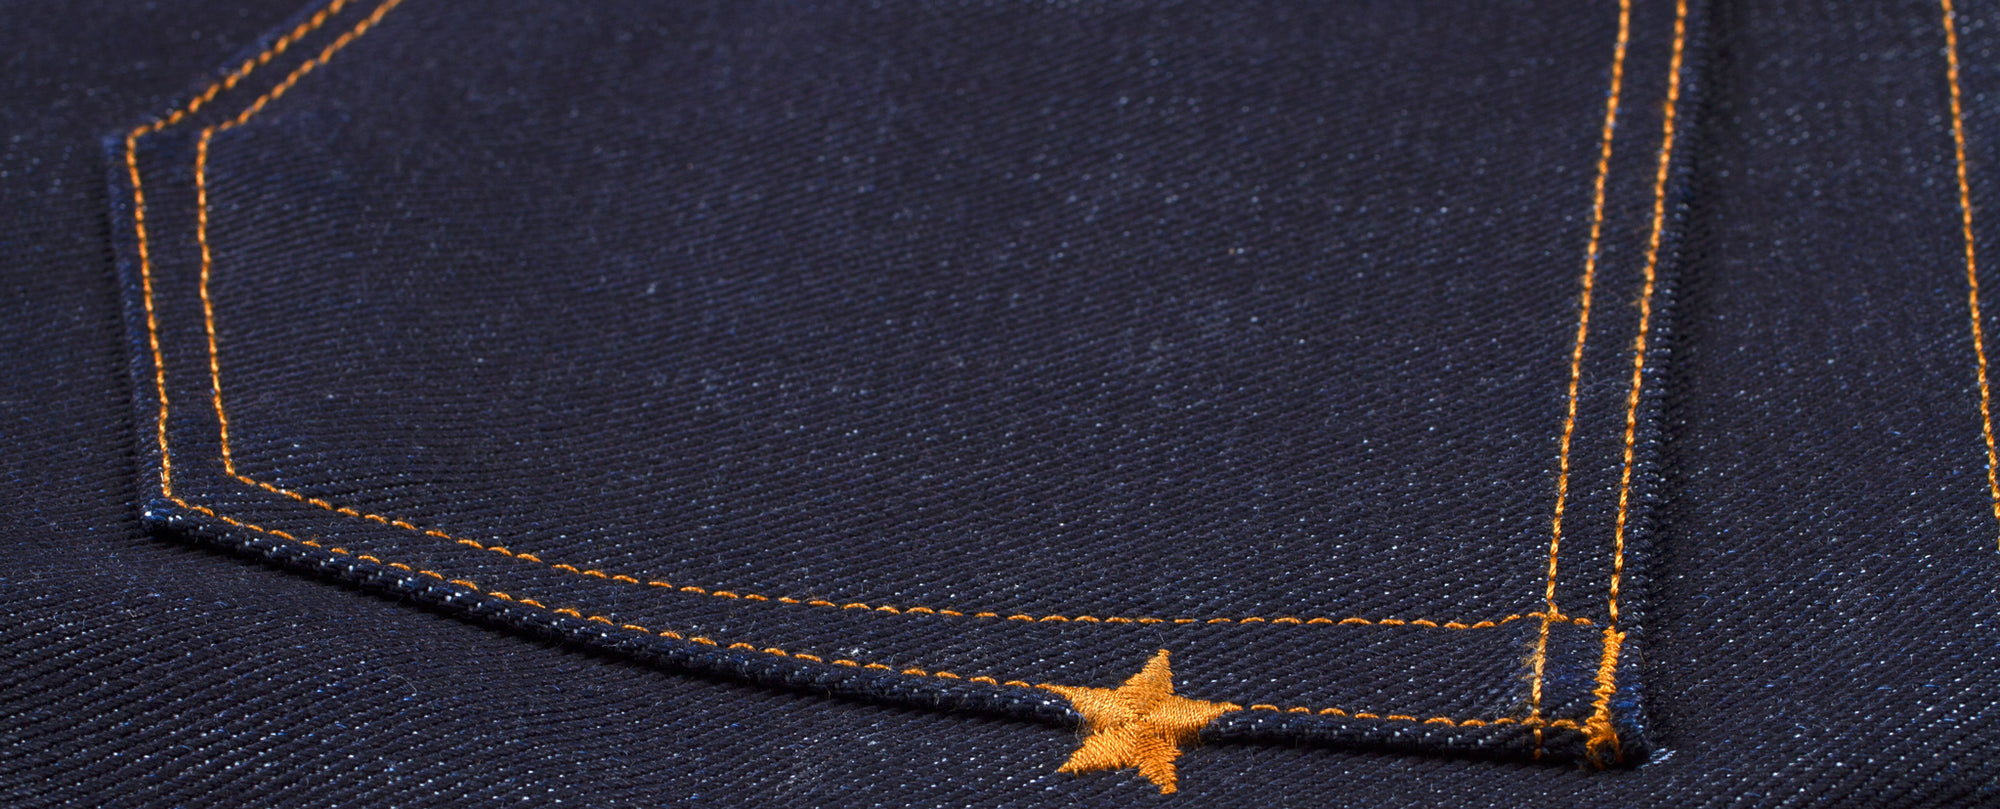 Restore cph - Pre-owned Brave Star Selvage Denim Jeans, Regular